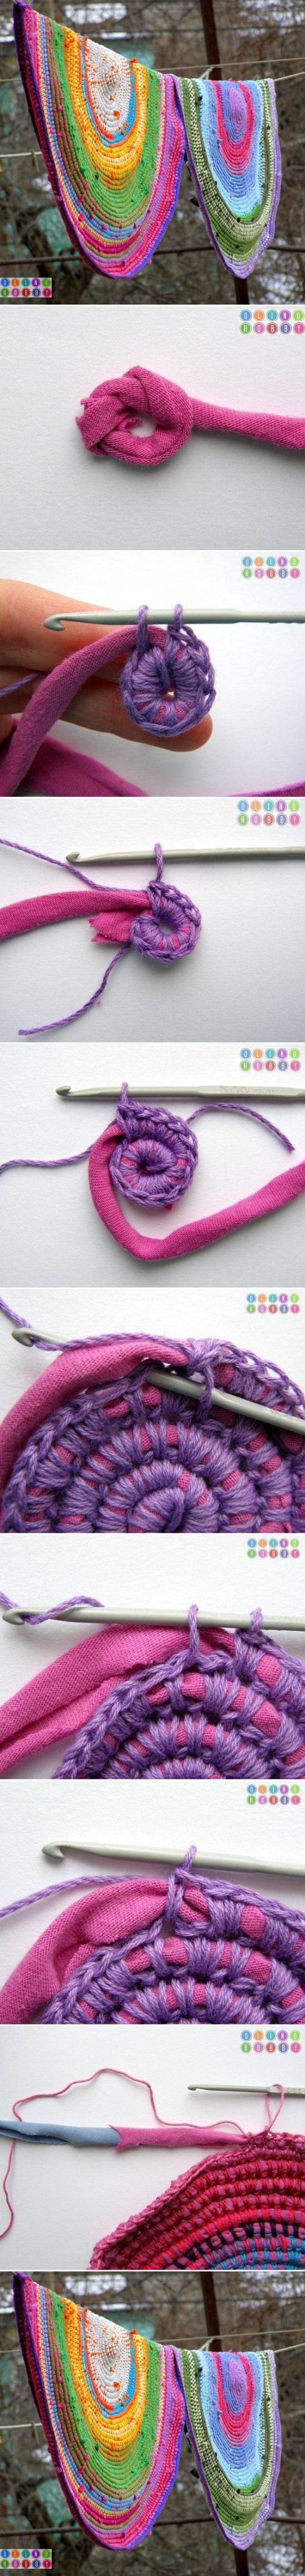 DIY-Old-T-shirt-Crochet-Rug.jpg